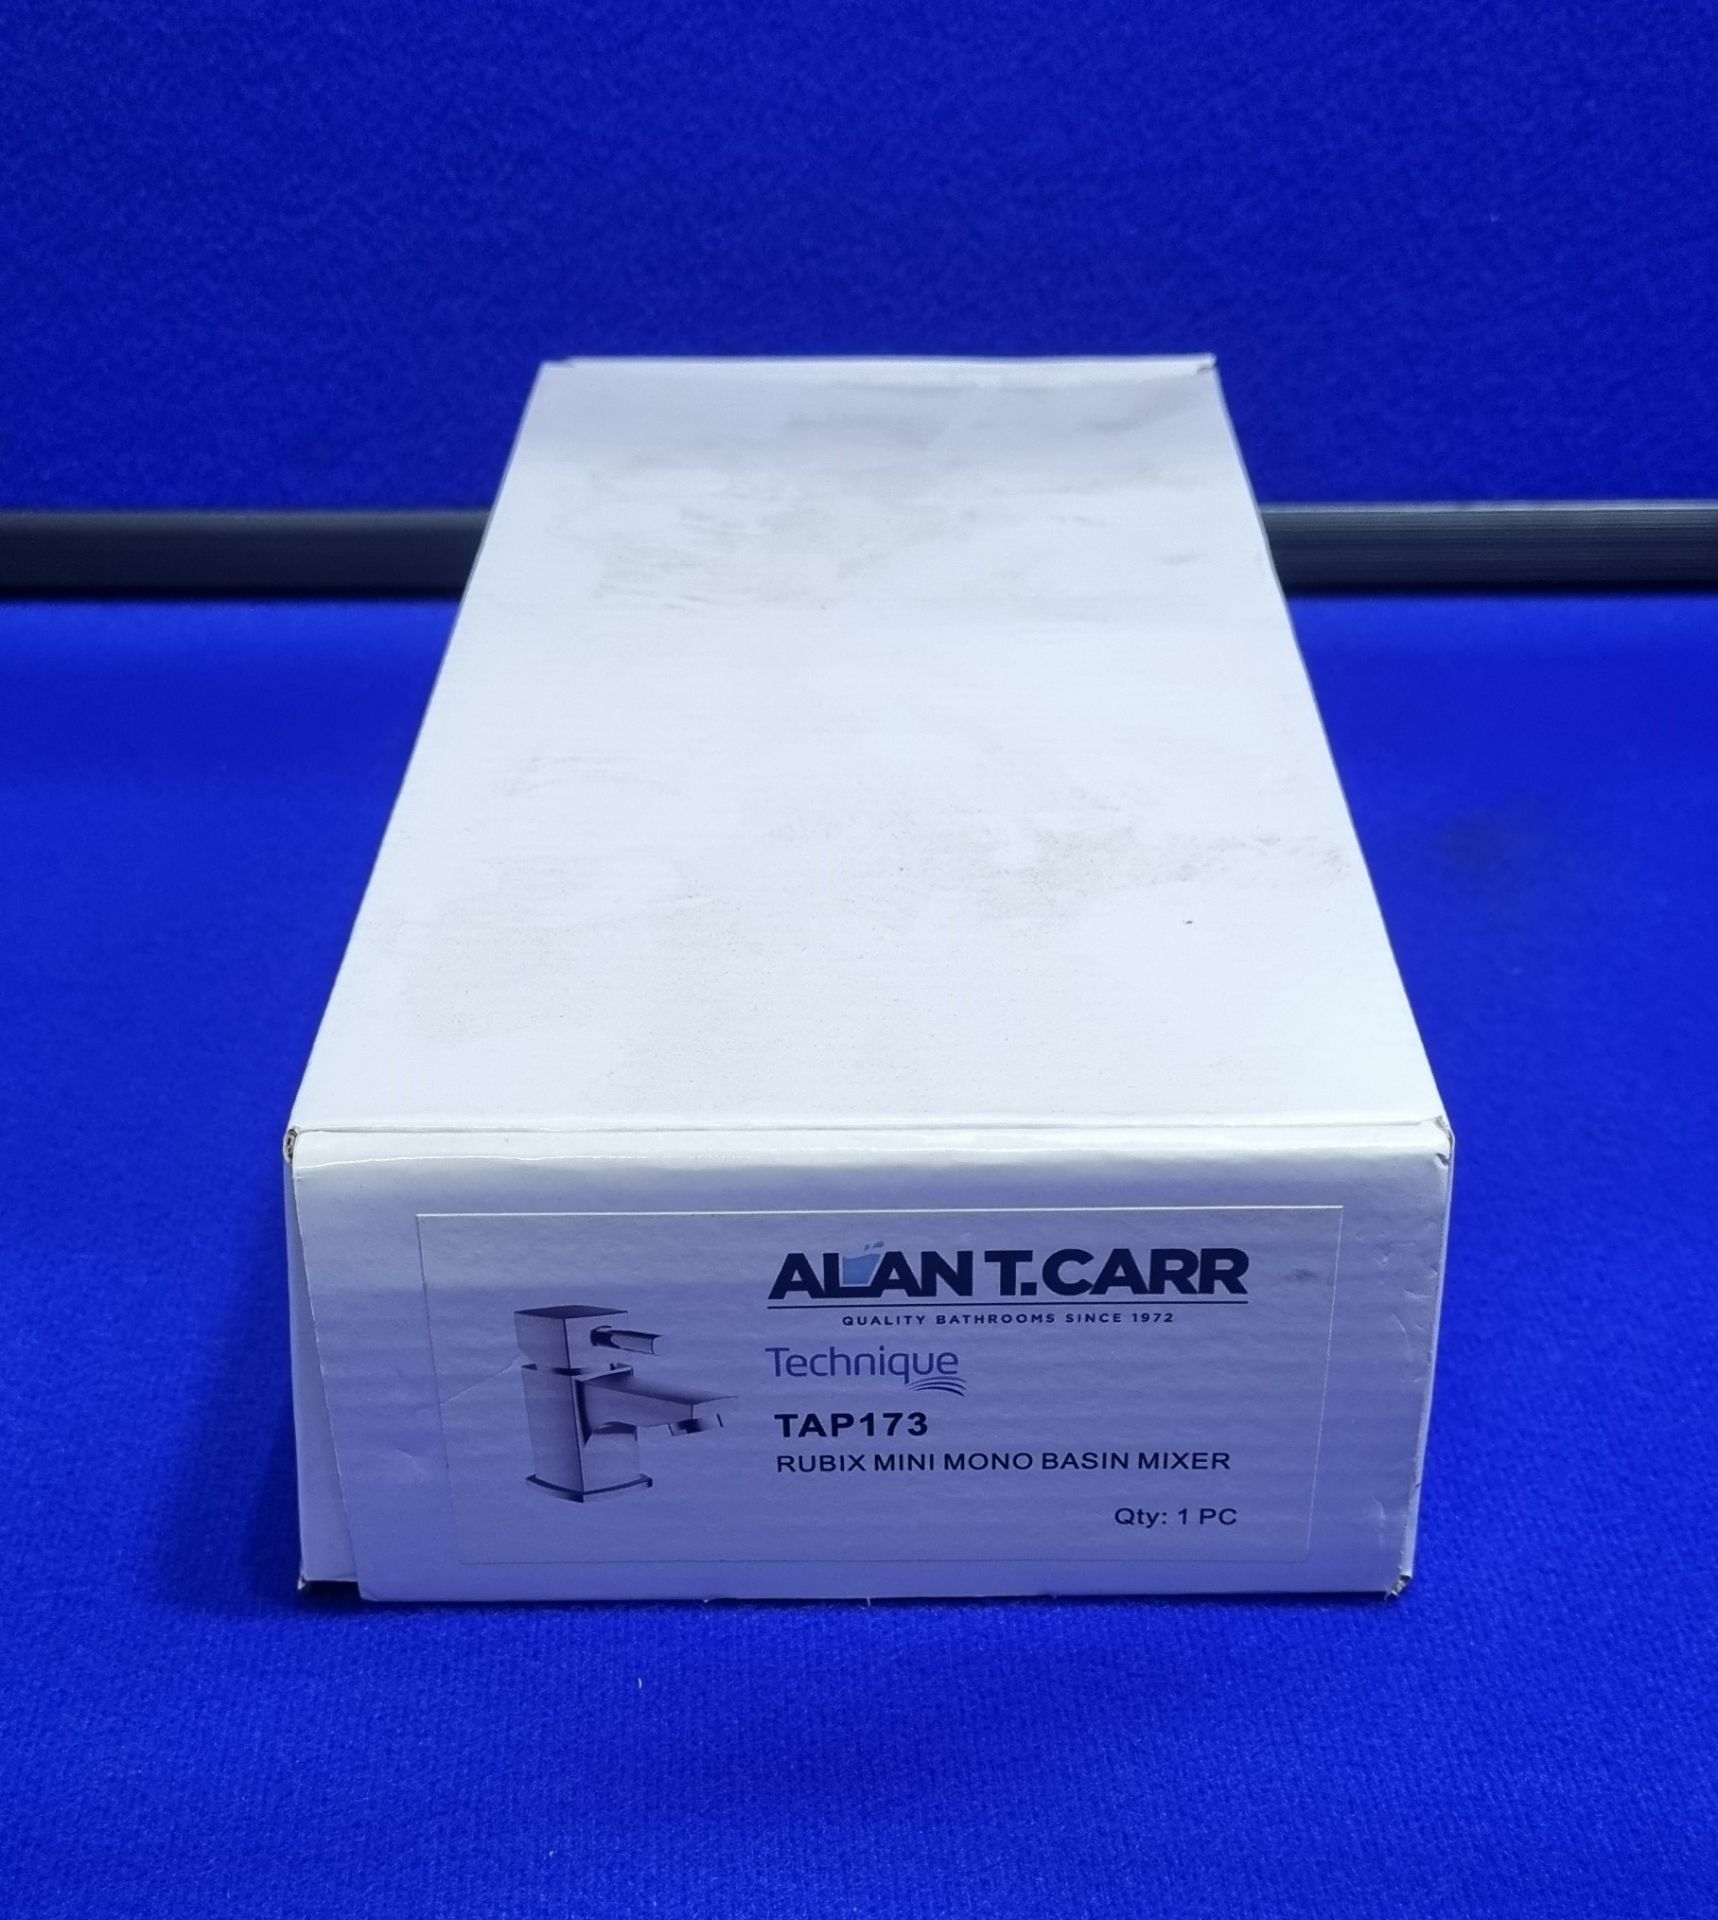 Ex Display Alan T Carr Rubix TAP173 Mini Mono Bloc Basin Mixer Tap - Image 4 of 4